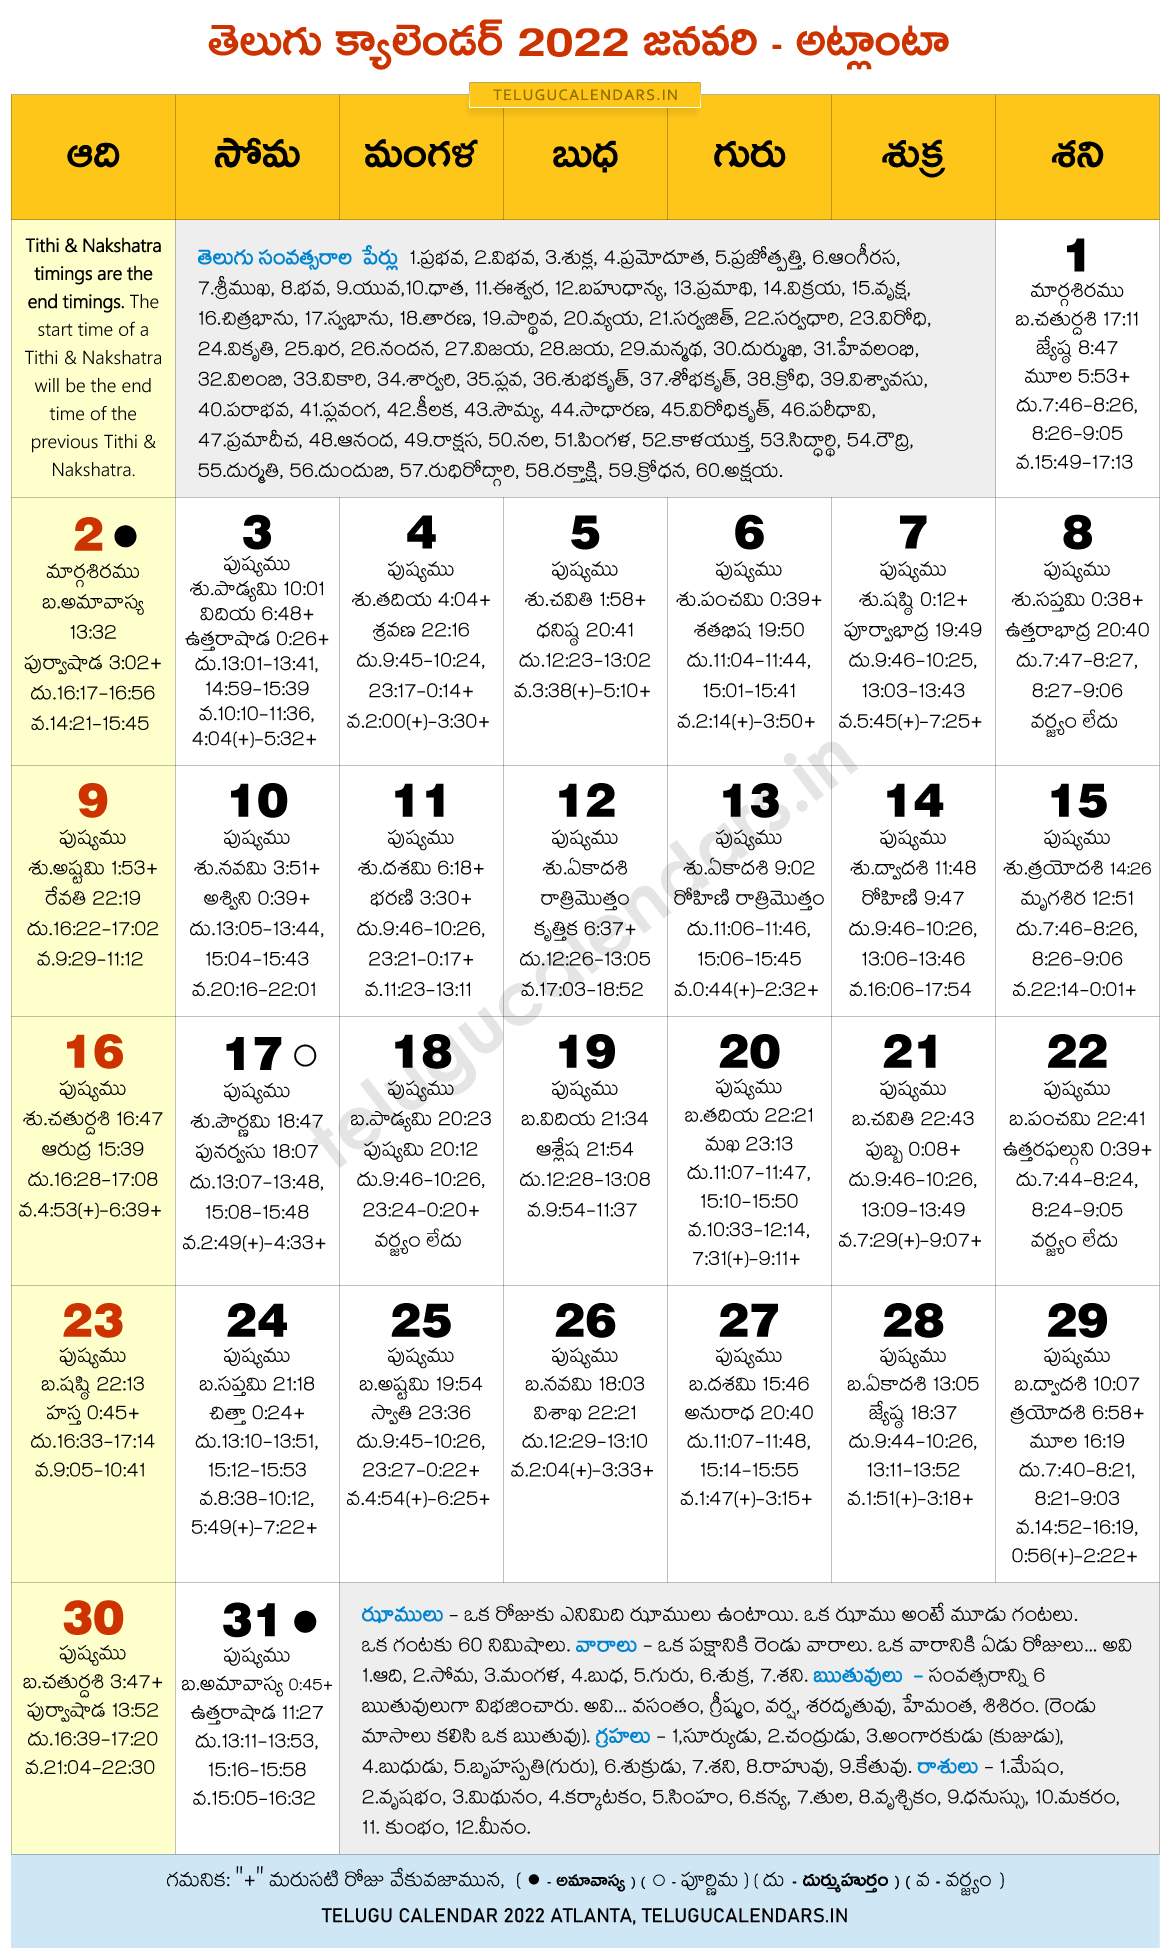 Atlanta Telugu Calendar 2022 - April 2022 Calendar